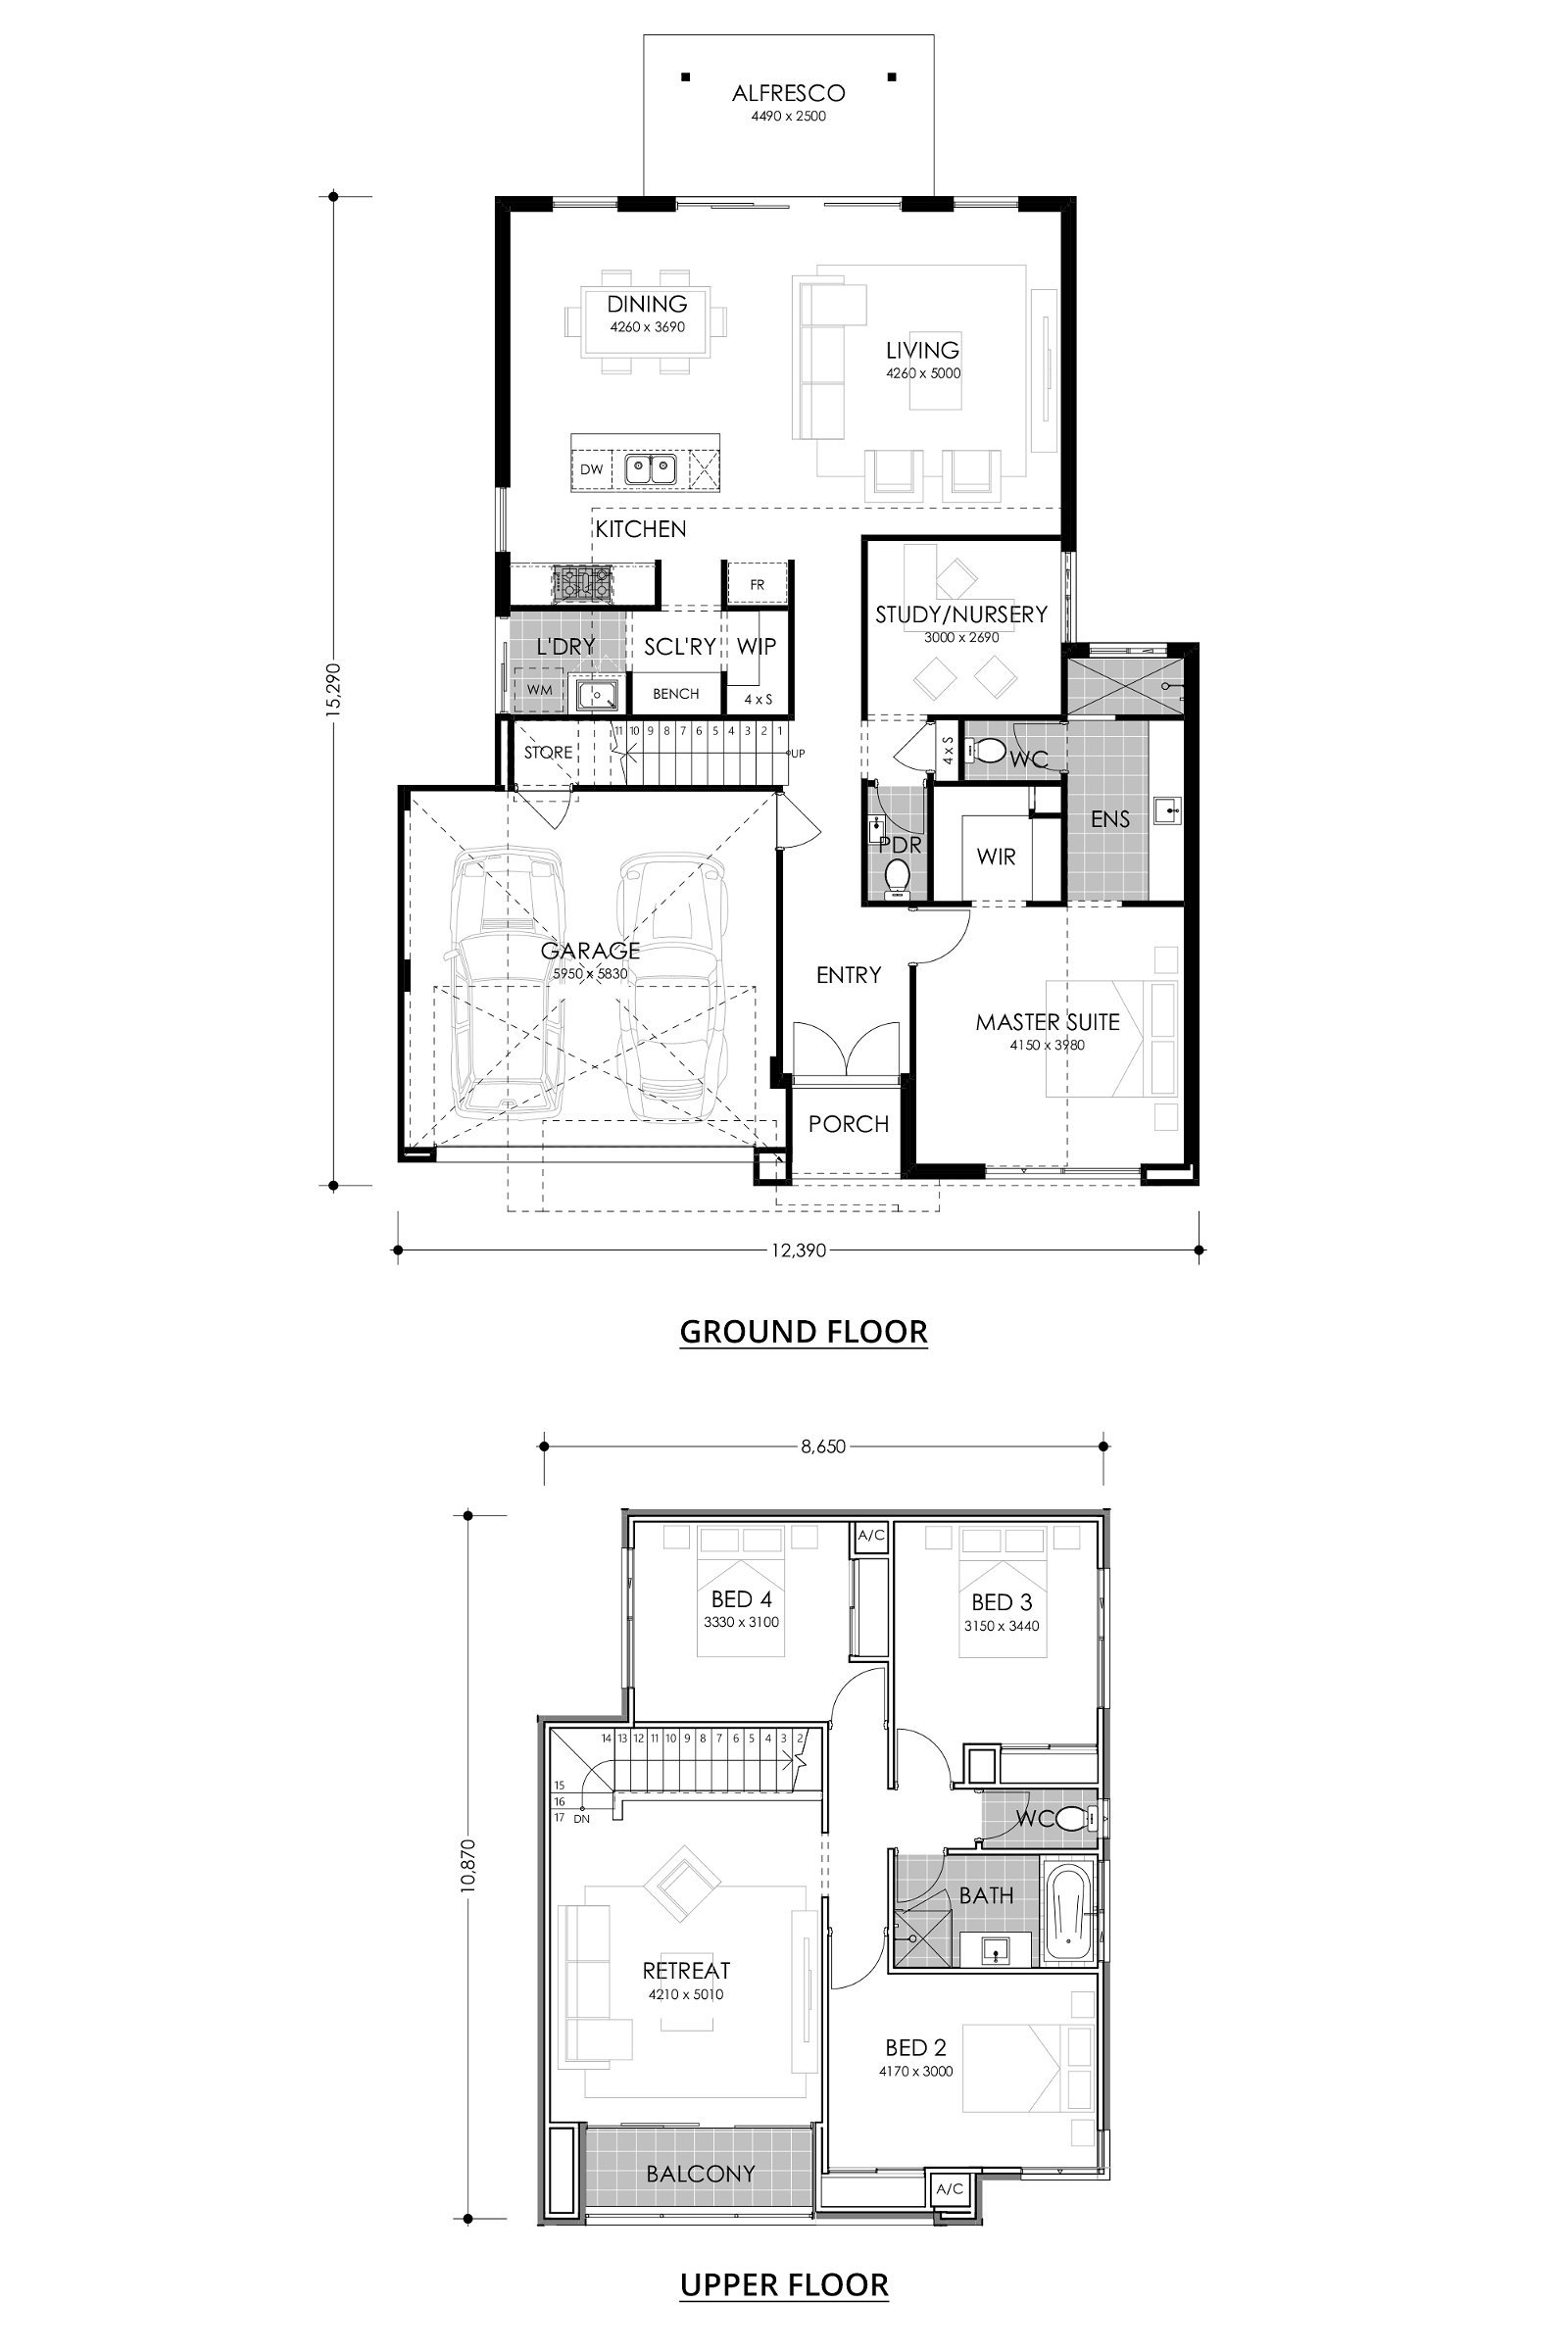 Residential Attitudes - Tech Modern - Floorplan - Tech Modern Floorplan Website